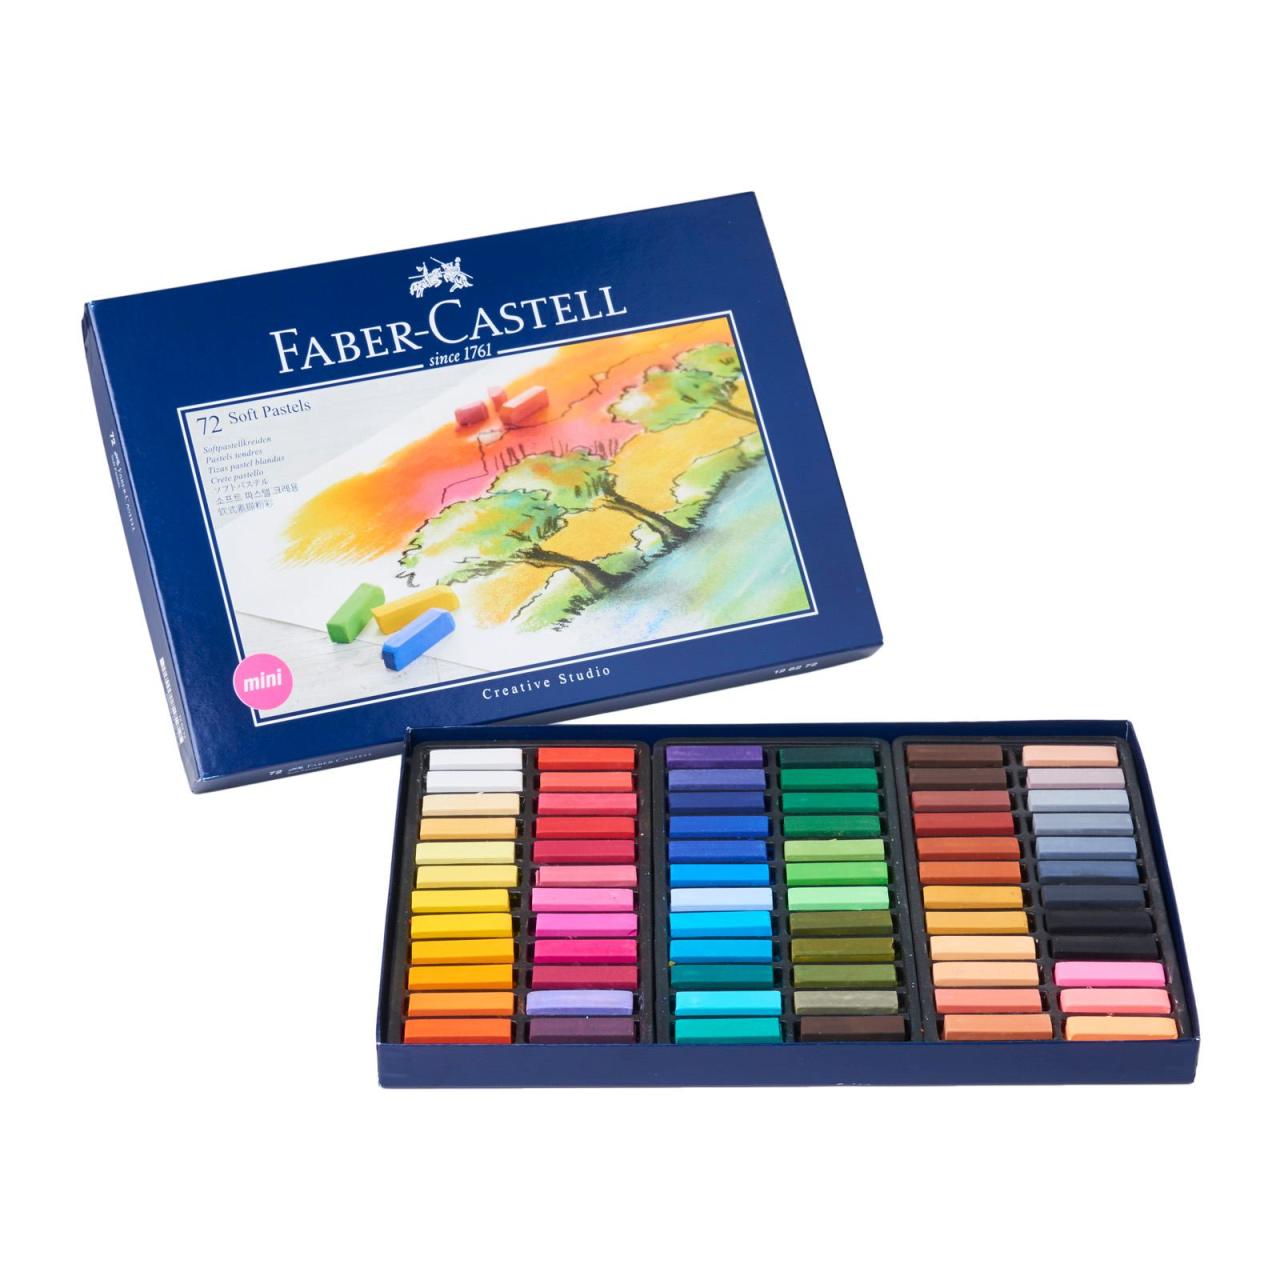 Faber Castell Creative Studio Toz (Soft) Pastel Boya 72 Renk Yarım Boy